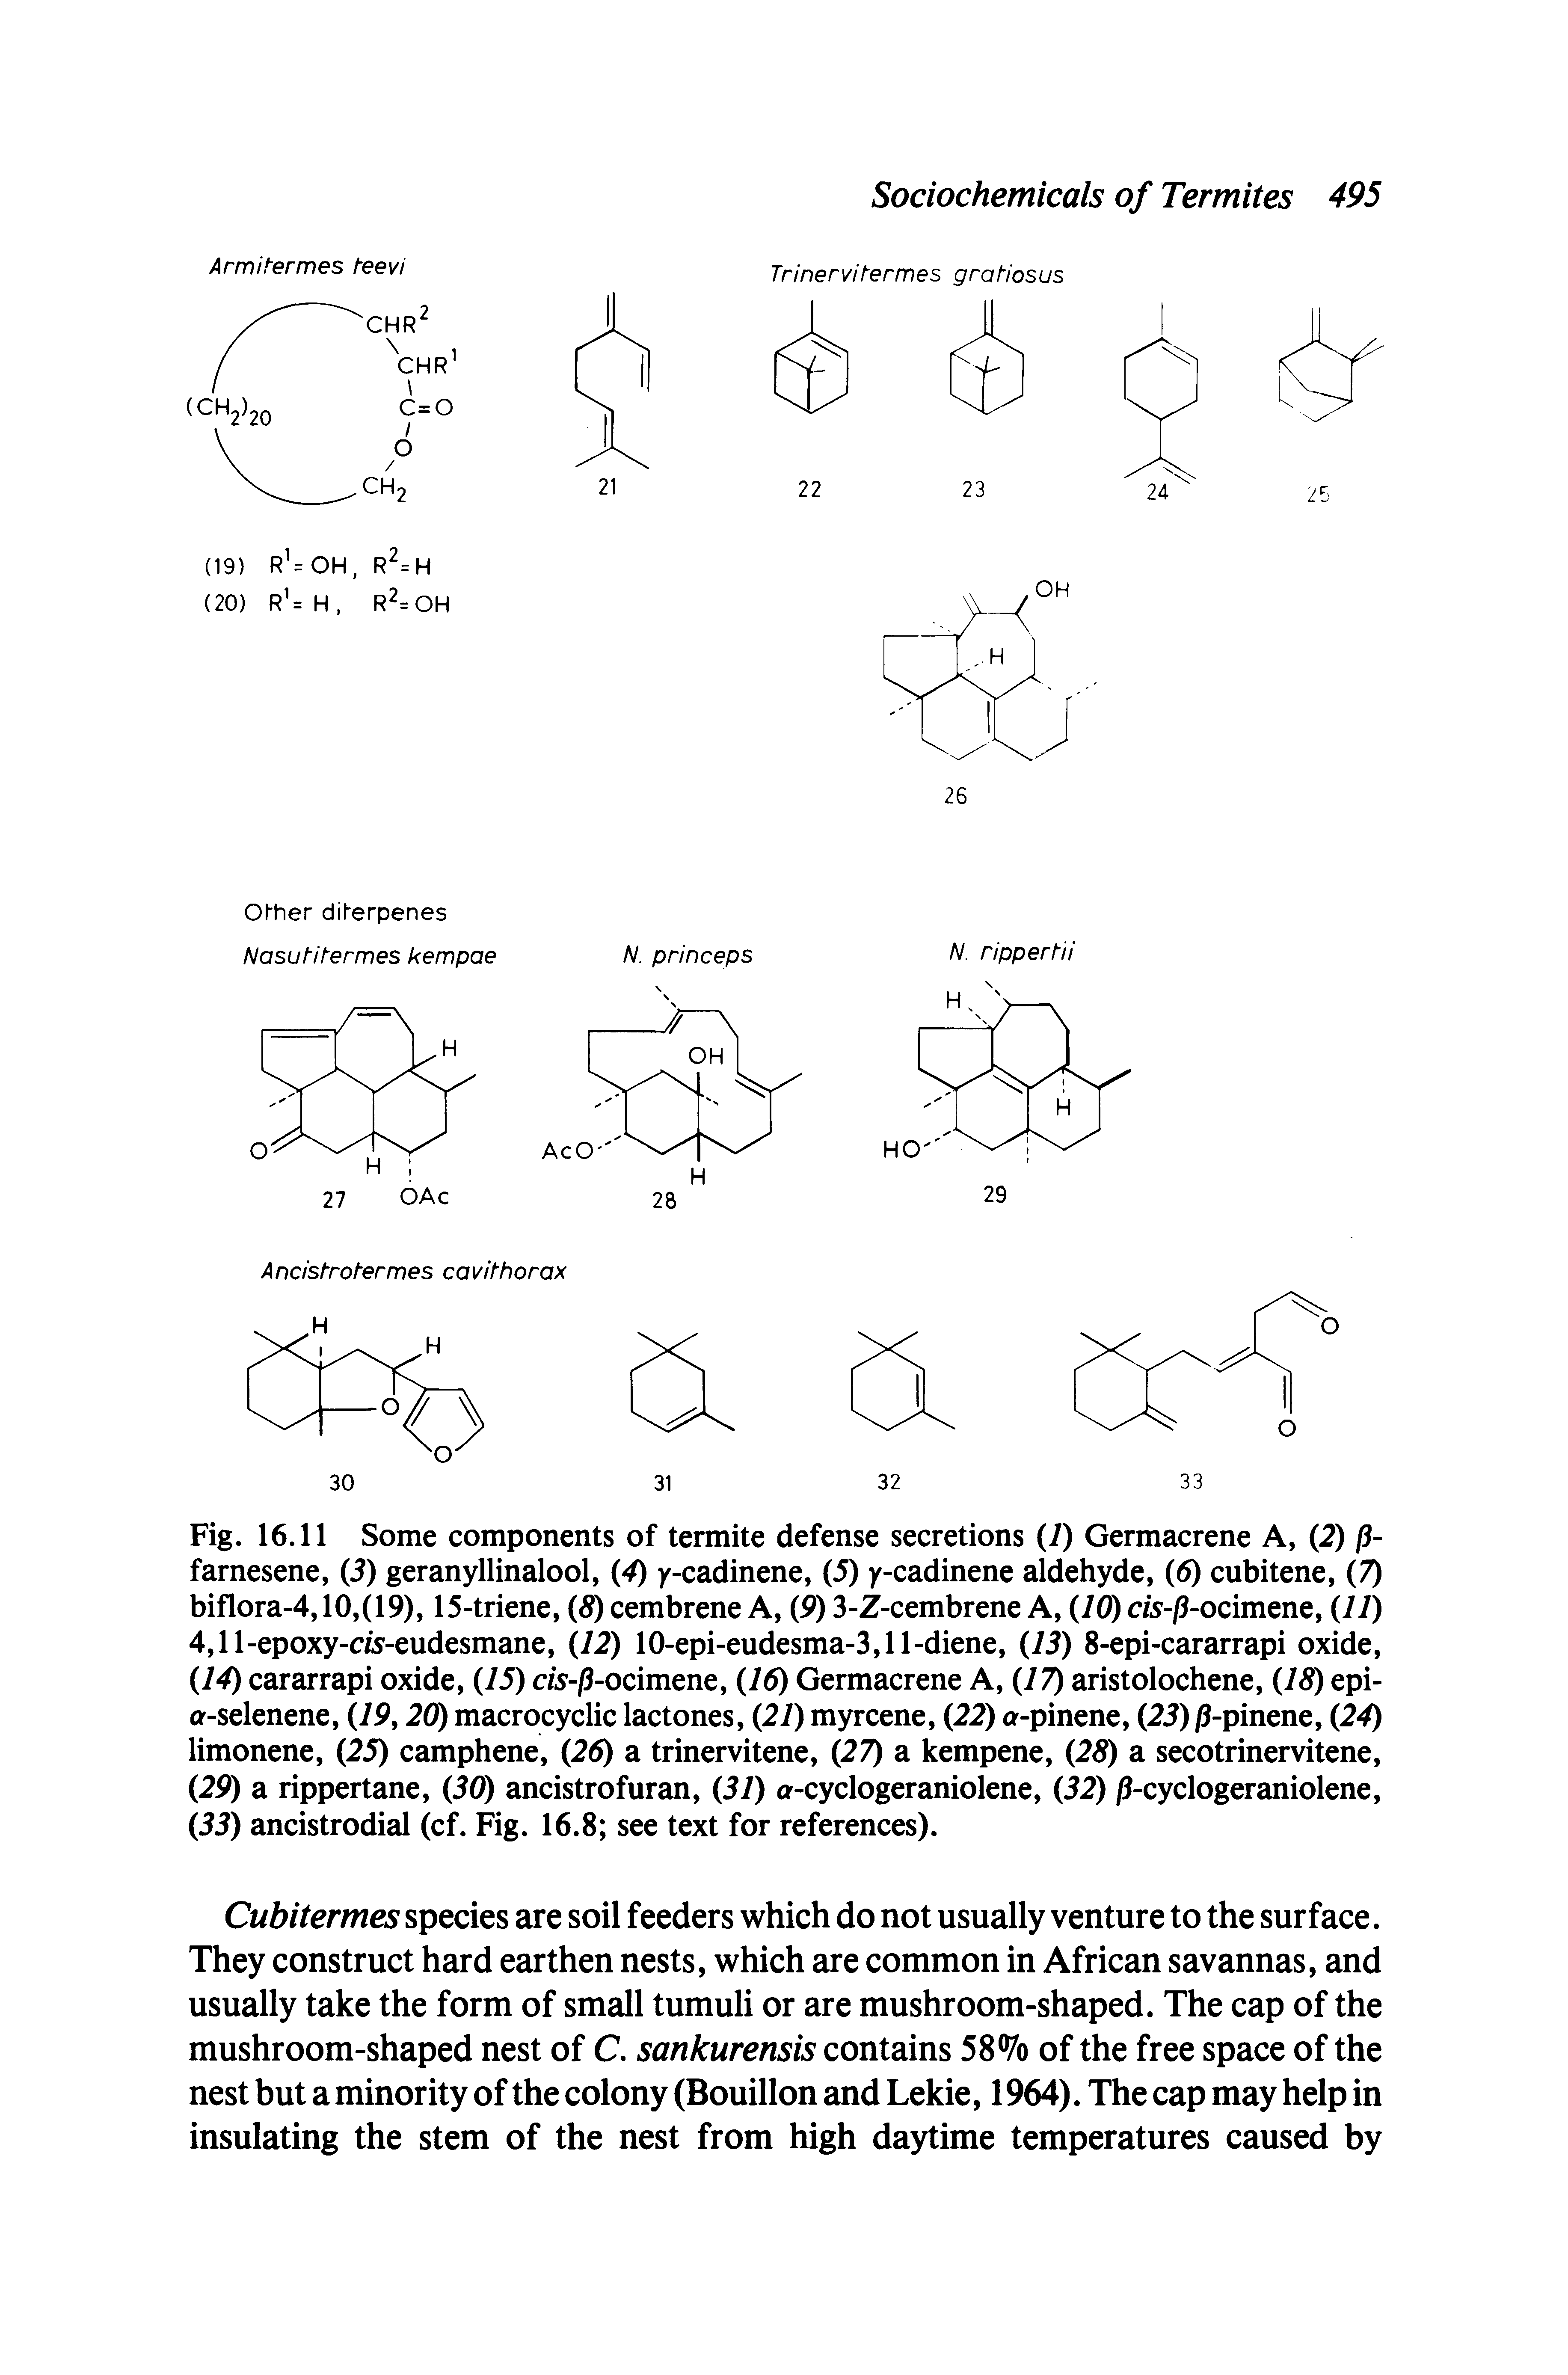 Fig. 16.11 Some components of termite defense secretions (7) Germacrene A, (2) p-farnesene, (5) geranyllinalool, (4) y-cadinene, (5) y-cadinene aldehyde, (5) cubitene, (7) biflora-4,10,(19), 15-triene, (8) cembrene A, (P) 3-Z-cembrene A, (10) cis- -ocimene, (11) 4,ll-epoxy-c/5 -eudesmane, (12) lO-epi-eudesma-3,11-diene, (13) 8-epi-cararrapi oxide, (14) cararrapi oxide, (15) cis-P-ocimene, (16) Germacrene A, (17) aristolochene, (18) epi-a-selenene, (19,20) macrocyclic lactones, (21) myrcene, (22) a-pinene, (25)/3-pinene, (24) limonene, (25) camphene, (26) a trinervitene, (27) a kempene, (28) a secotrinervitene, (29) a rippertane, (30) ancistrofuran, (57) a-cyclogeraniolene, (52) -cyclogeraniolene, (55) ancistrodial (cf. Fig. 16.8 see text for references).